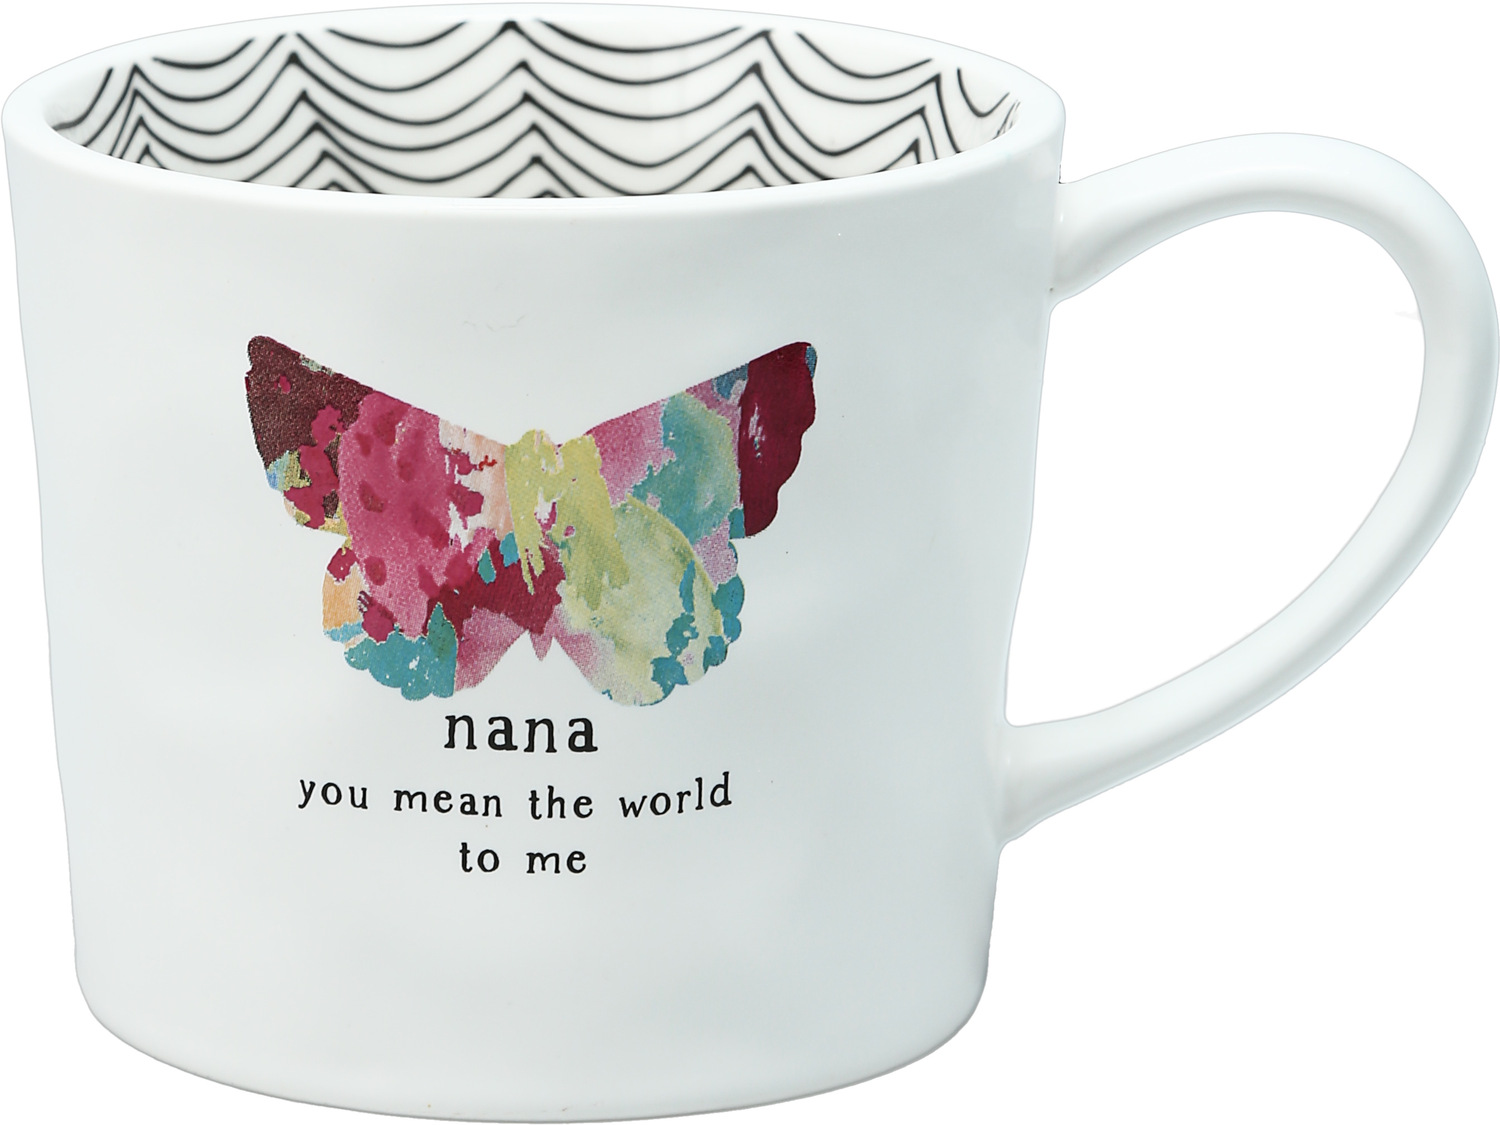 Nana by Celebrating You - Nana - 16 oz Mug